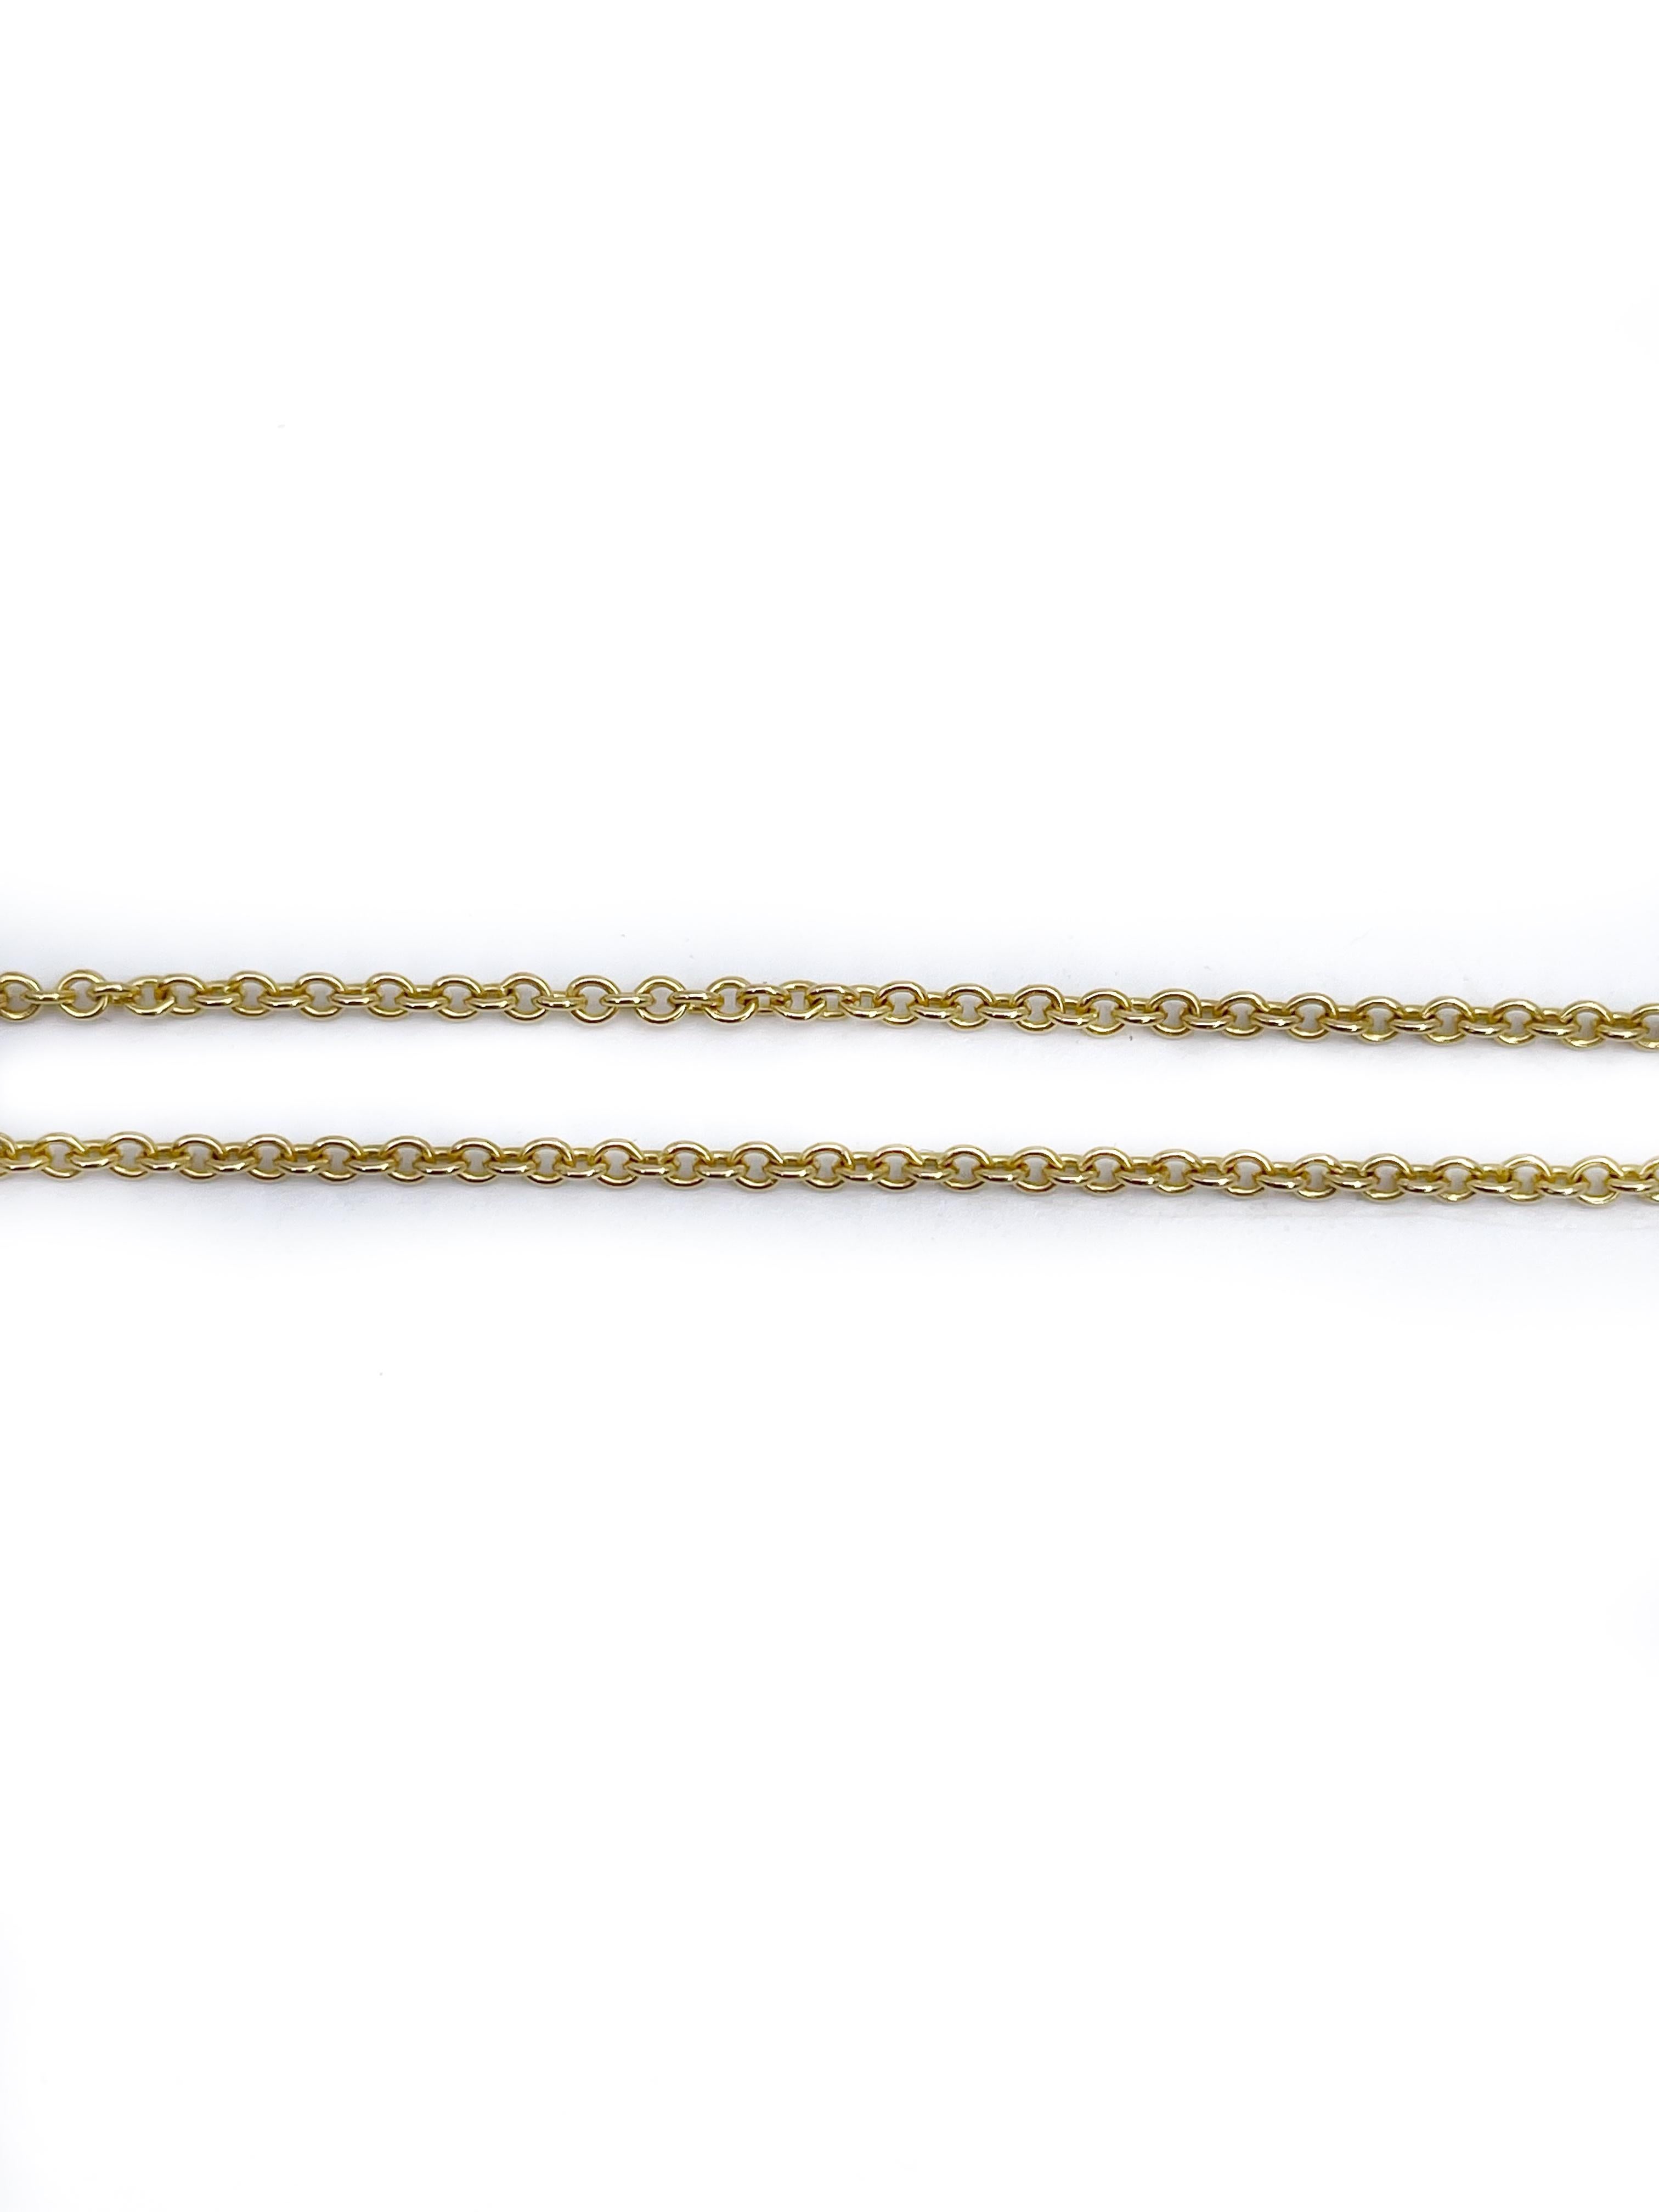 Modern Vintage 18 Karat Gold 3.76 Carat Topaz Collier Necklace